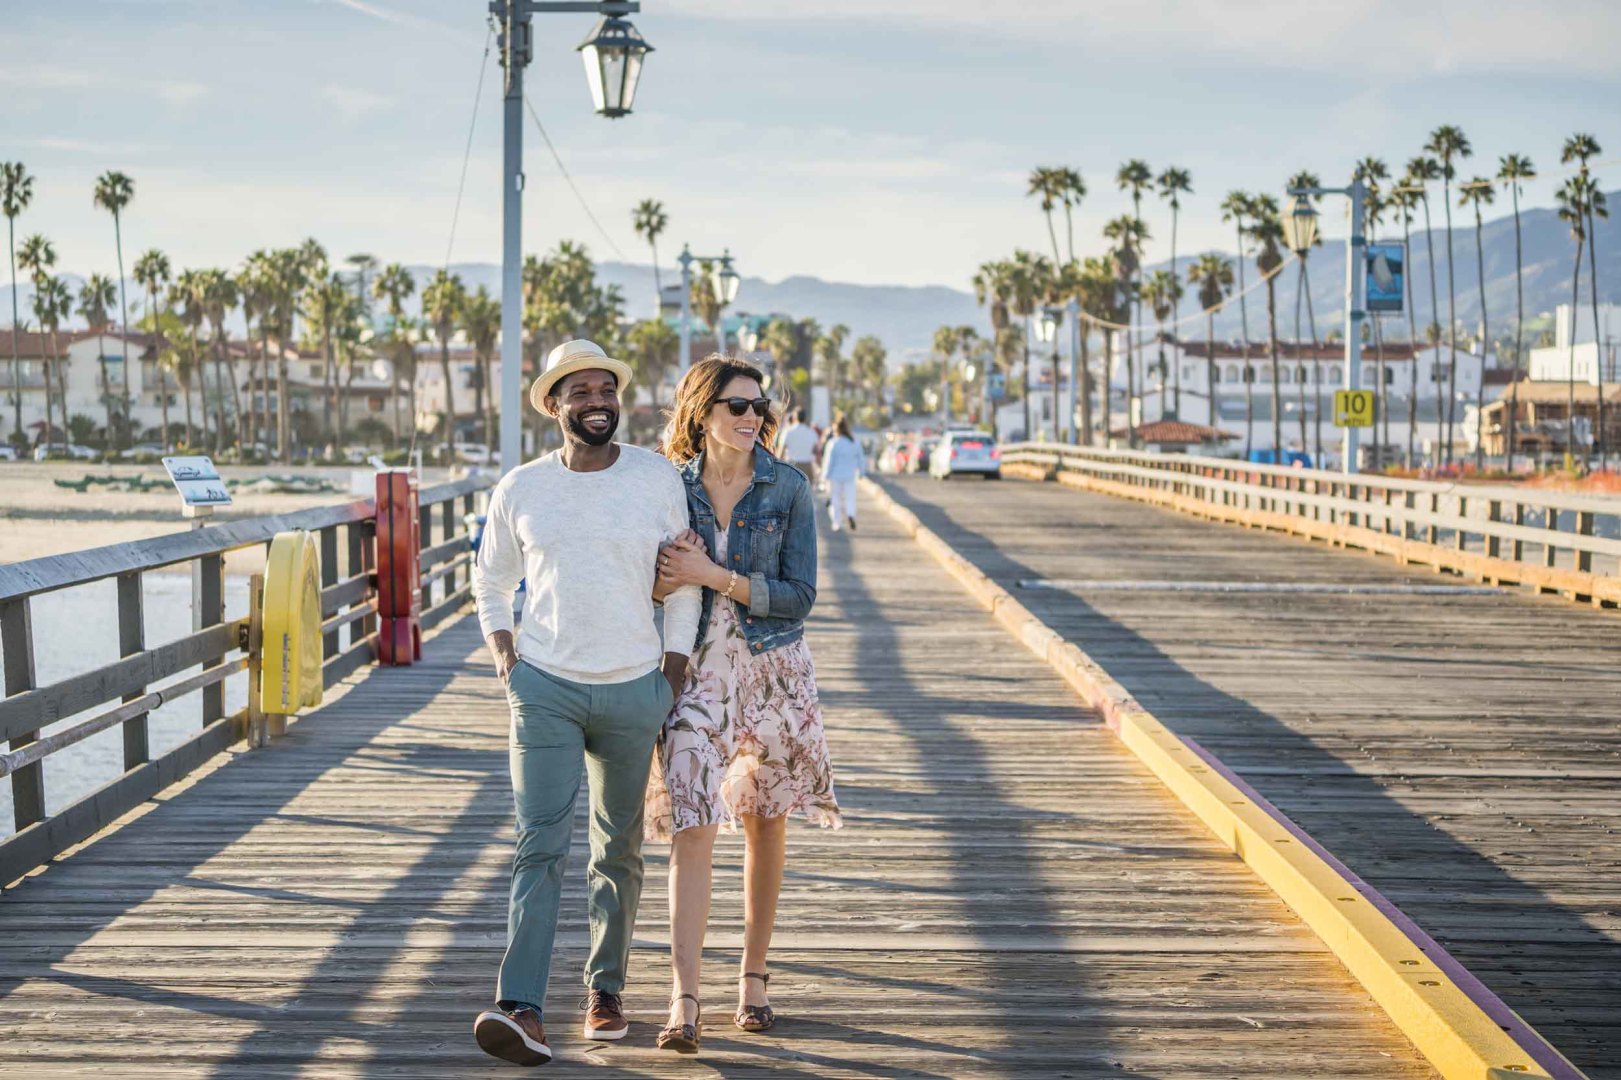 20 Best Things to Do in Santa Barbara, California 2022